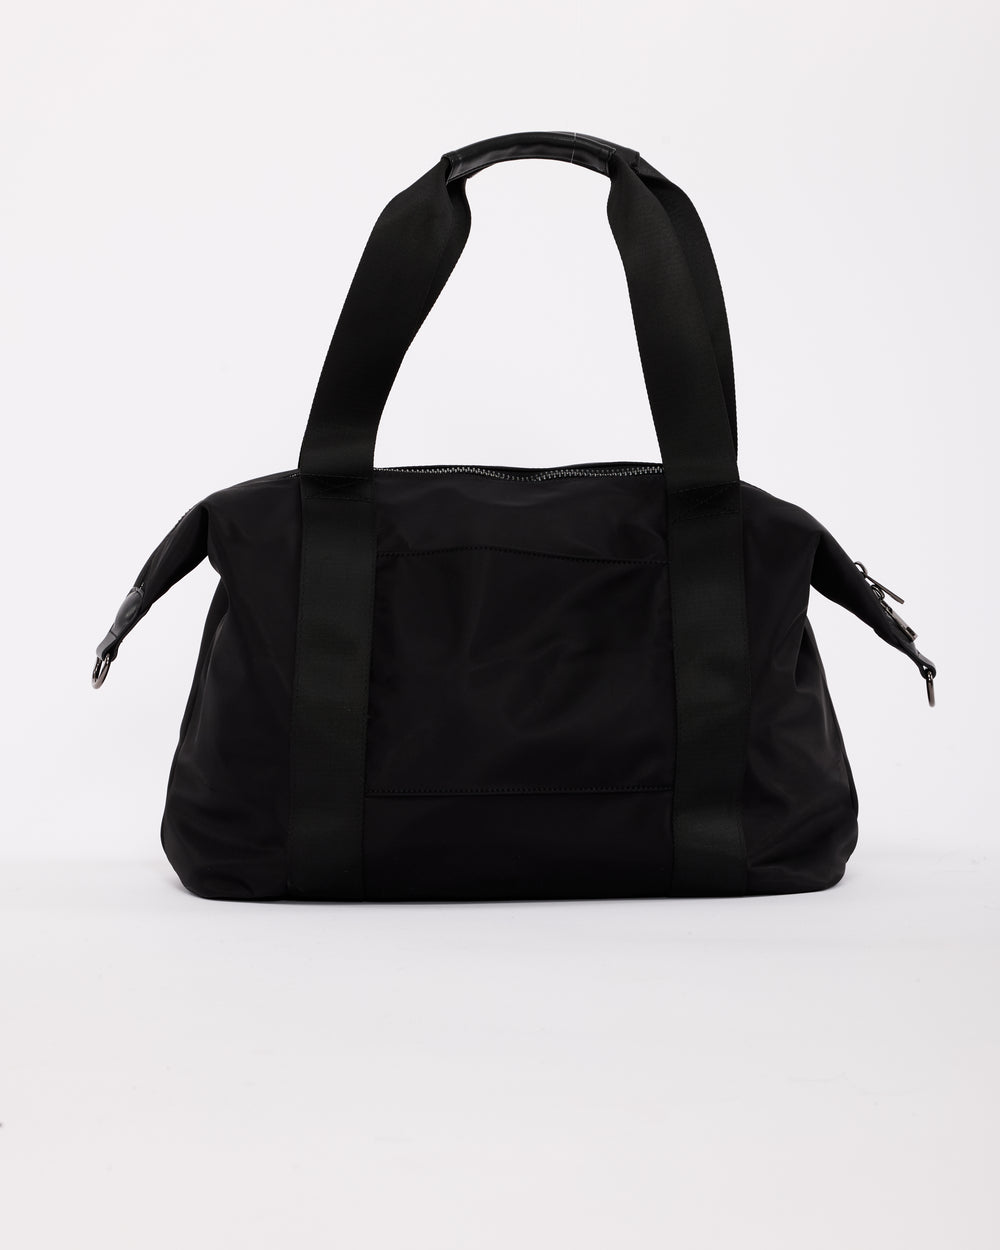 Equinox Gym Bag With Luggage Sleeve